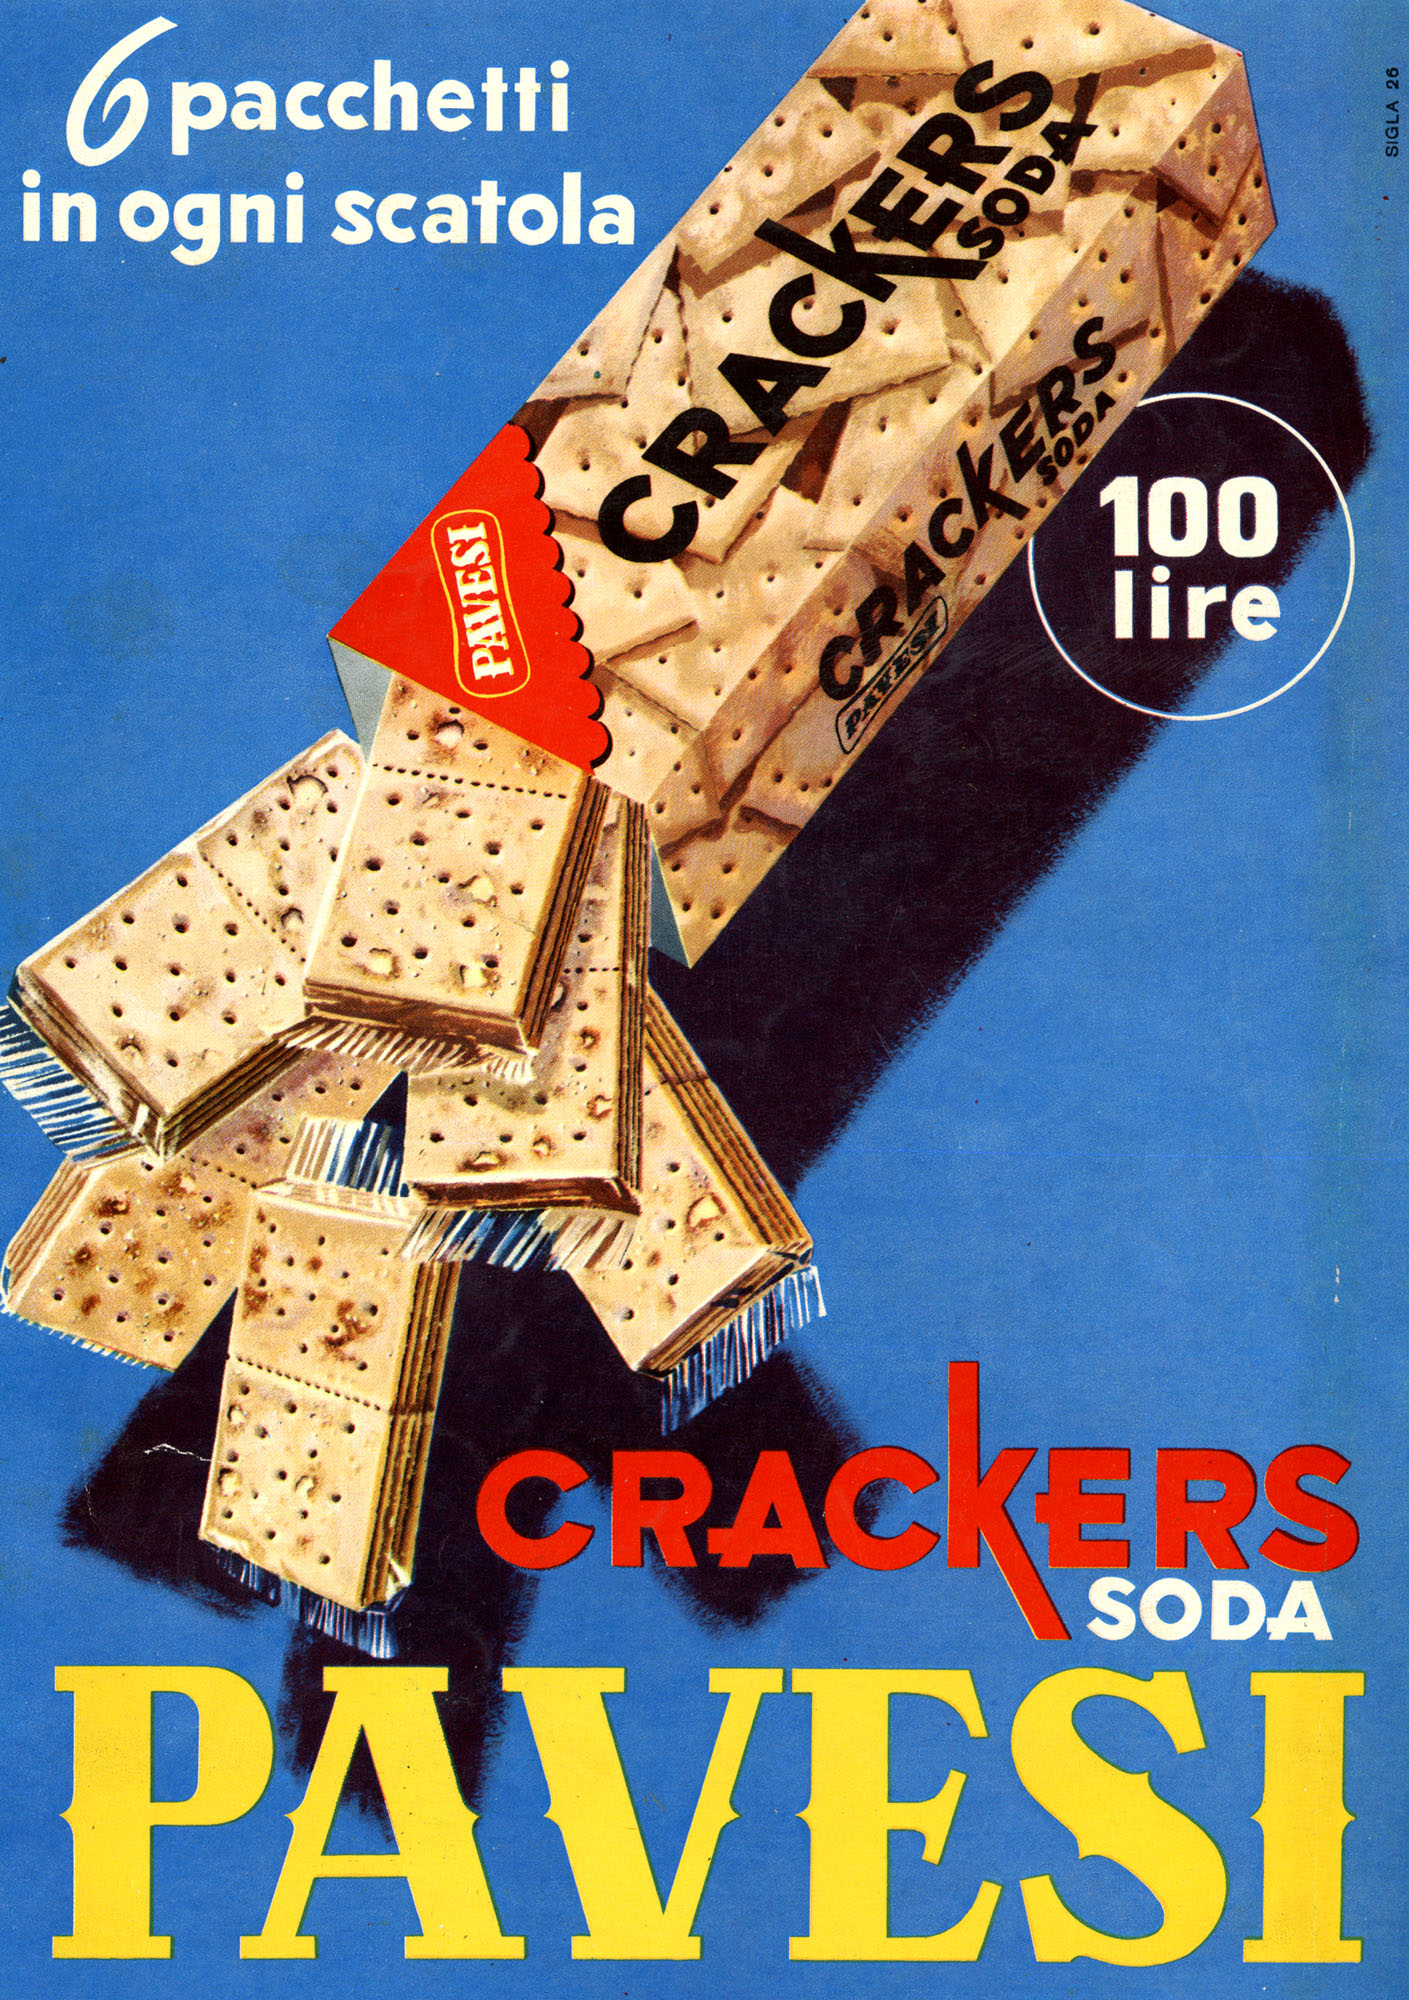 Press advertising Gran Pavesi Crackers, 1956